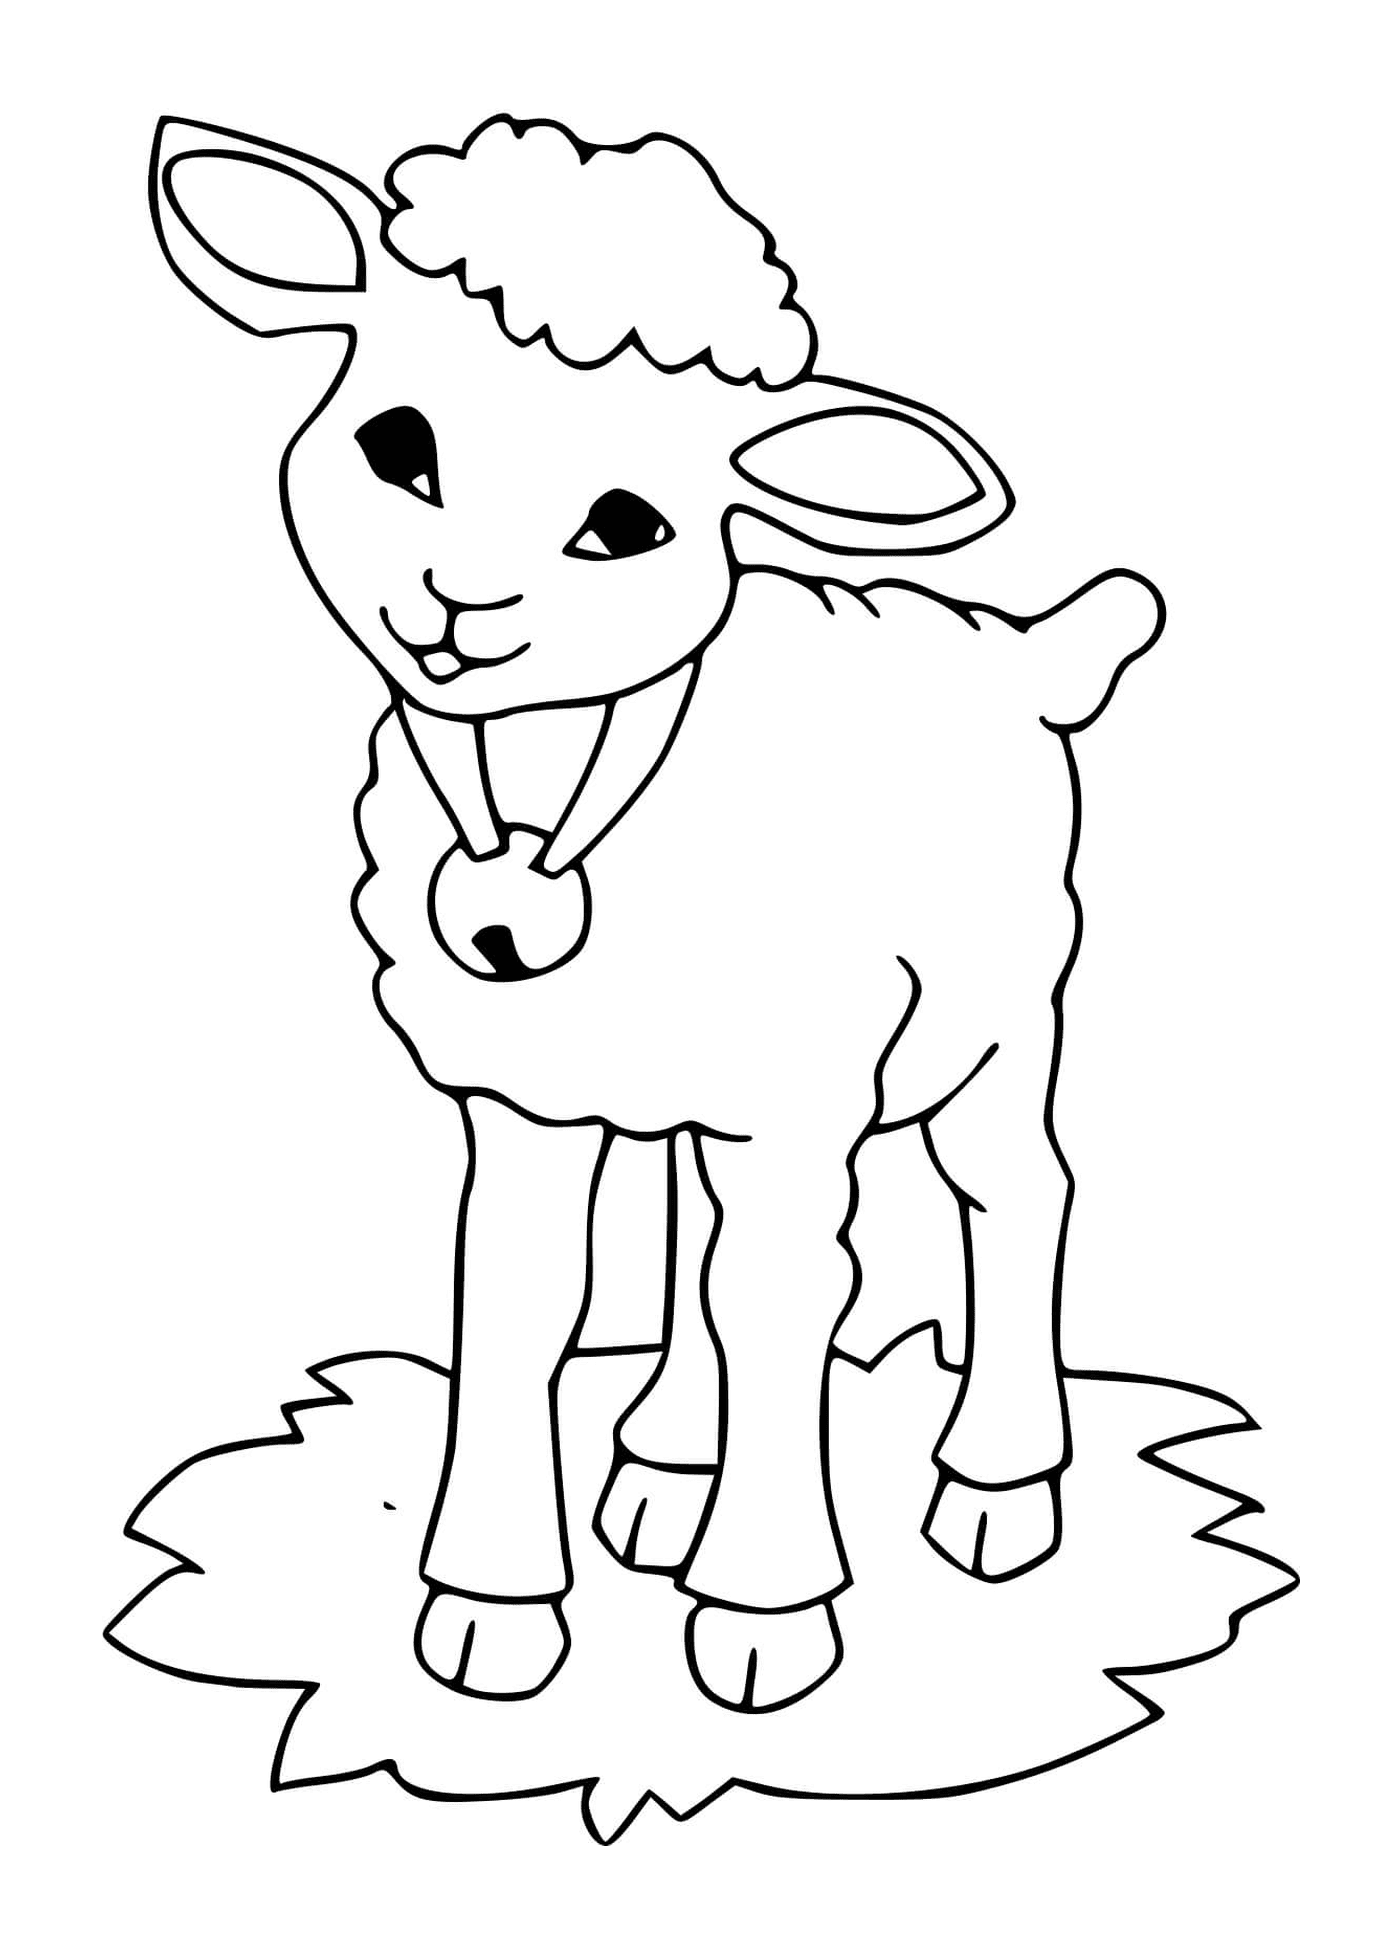  Lamb usa sino muito bem 